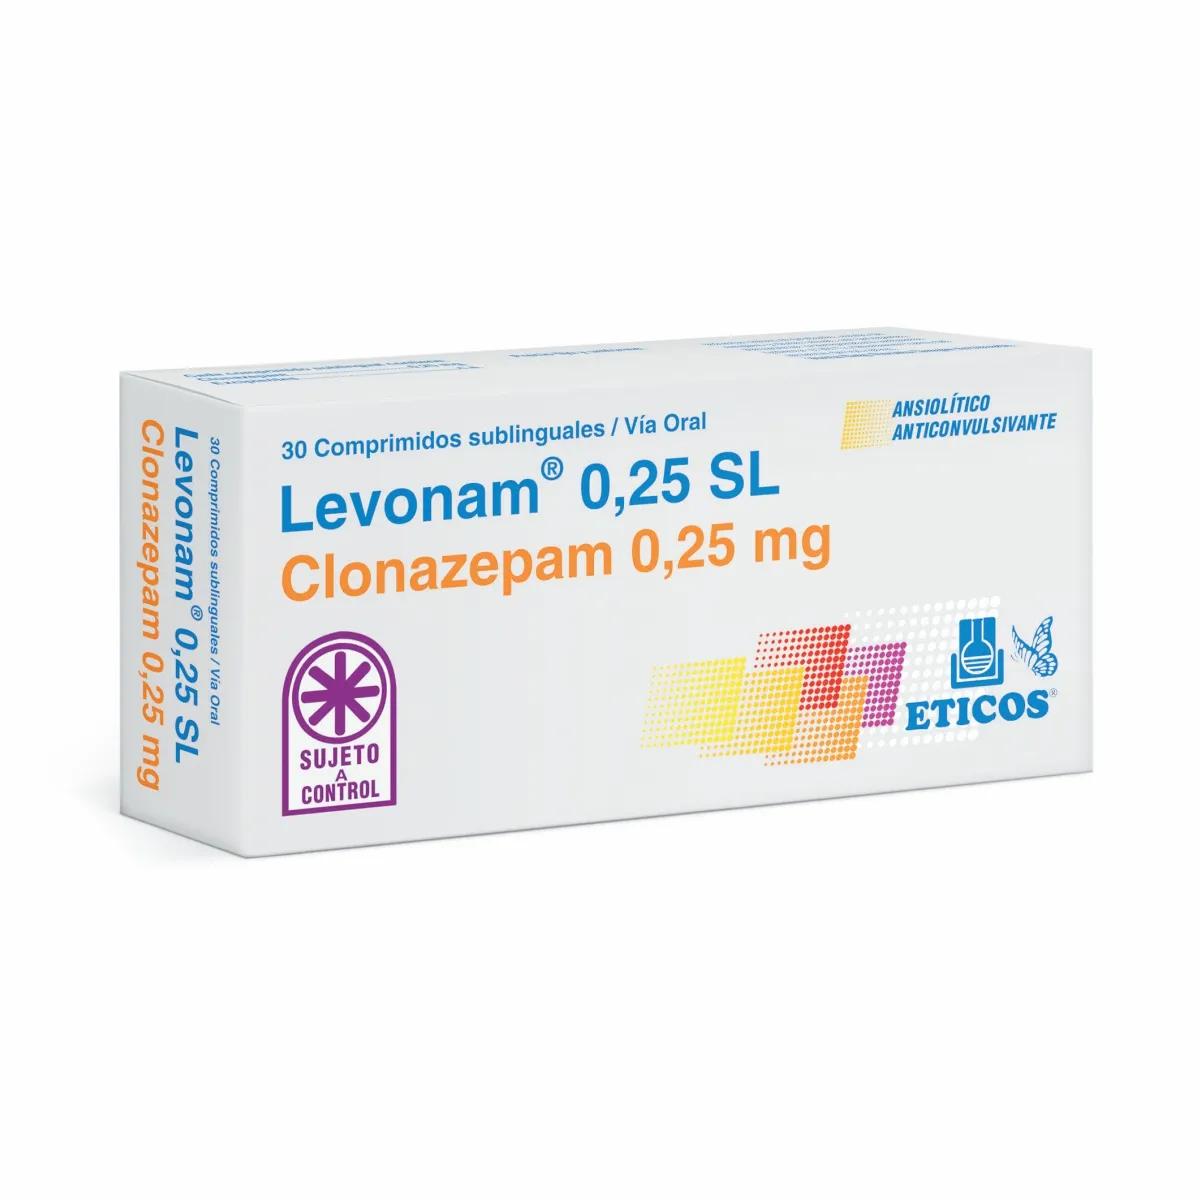 Levonam 0,25 Clonazepam 0,25 mg - Cont. 30 Comprimidos Sublinguales